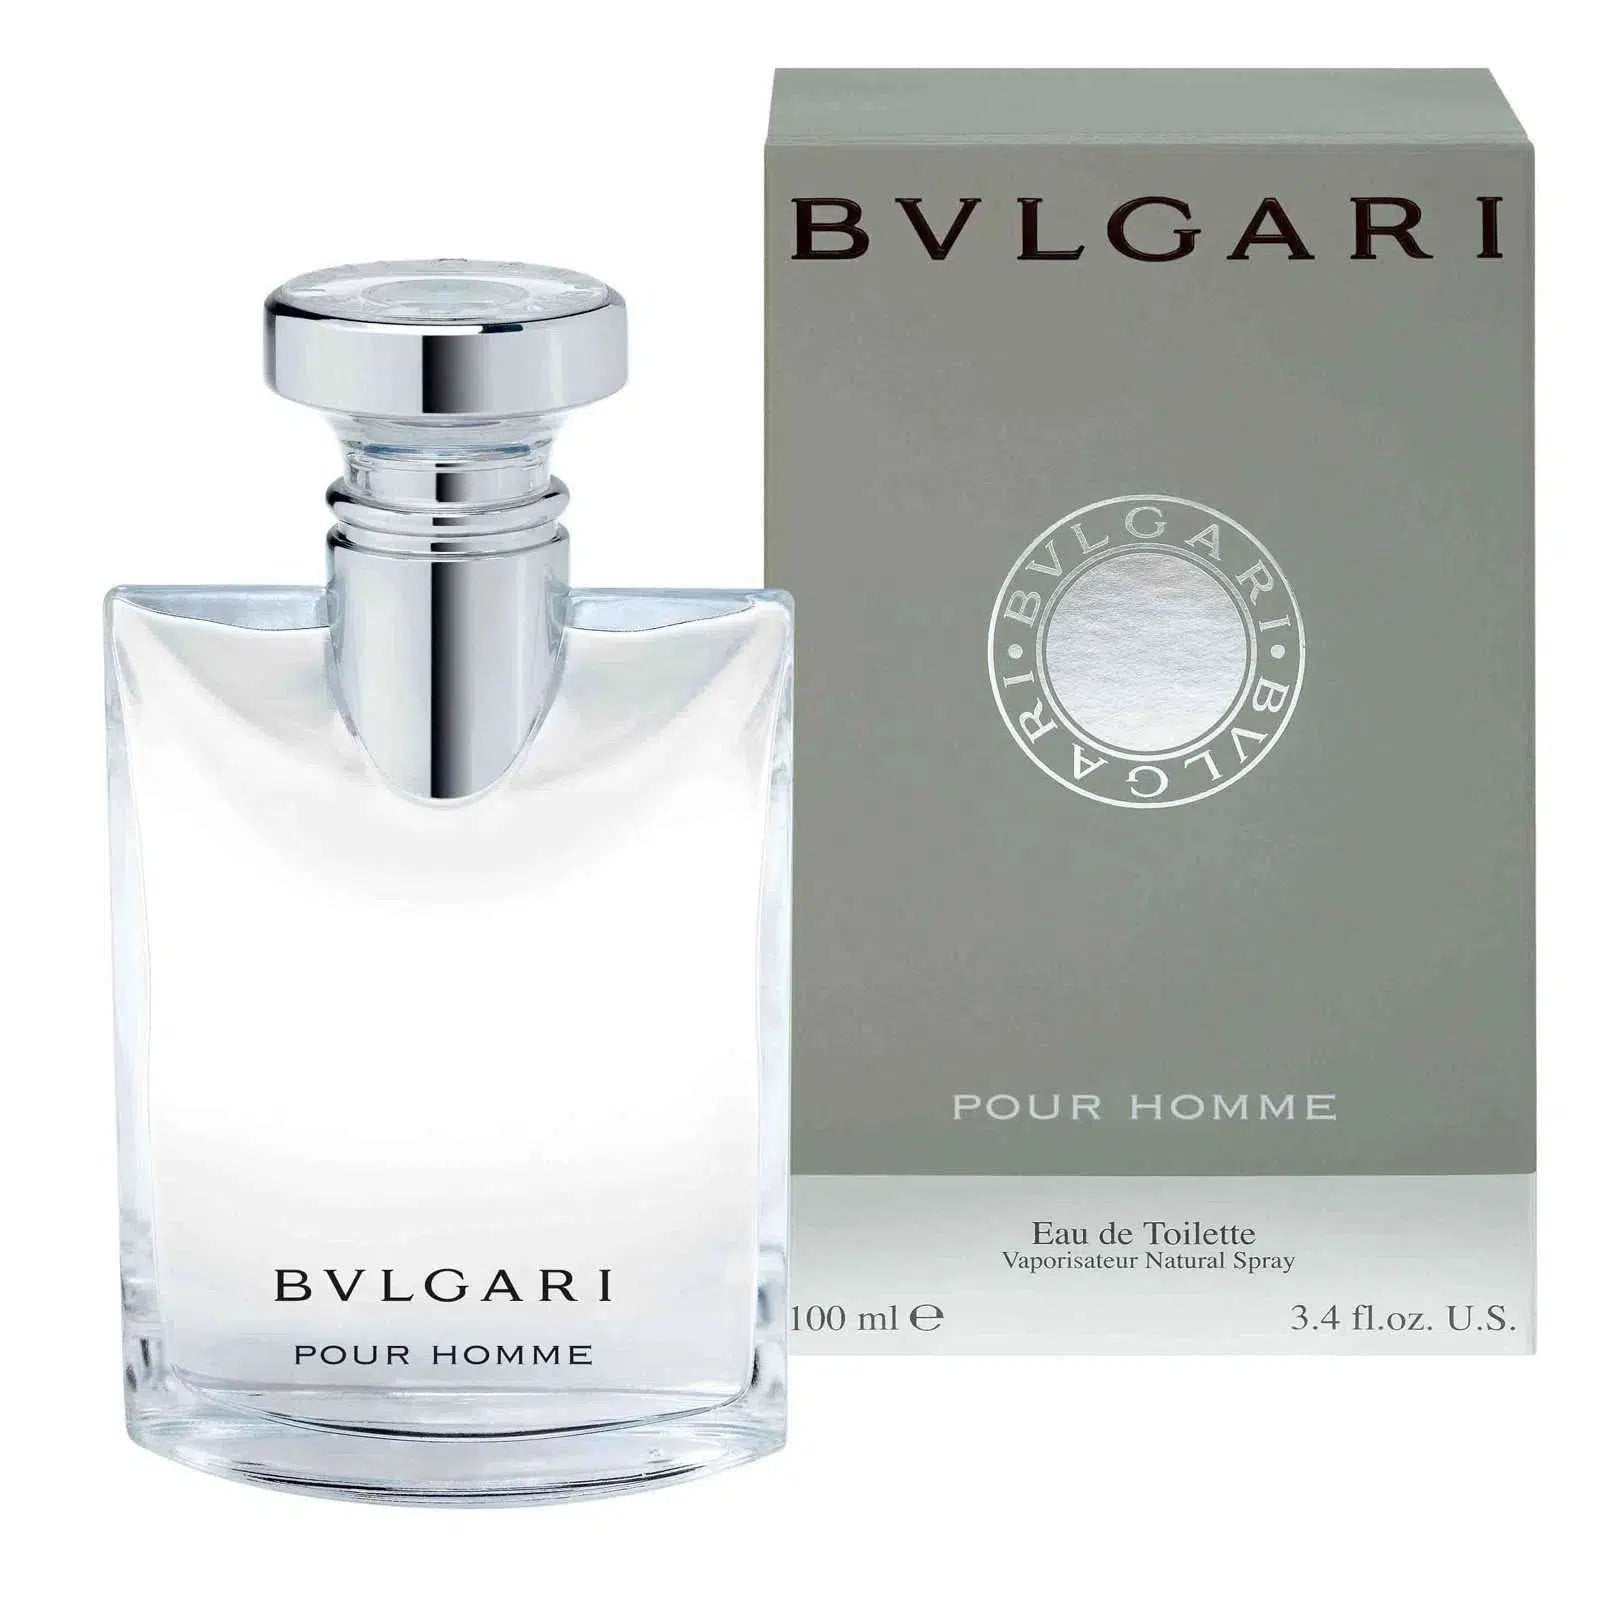 Bvlgari Pour Homme 100ml - Perfume Philippines